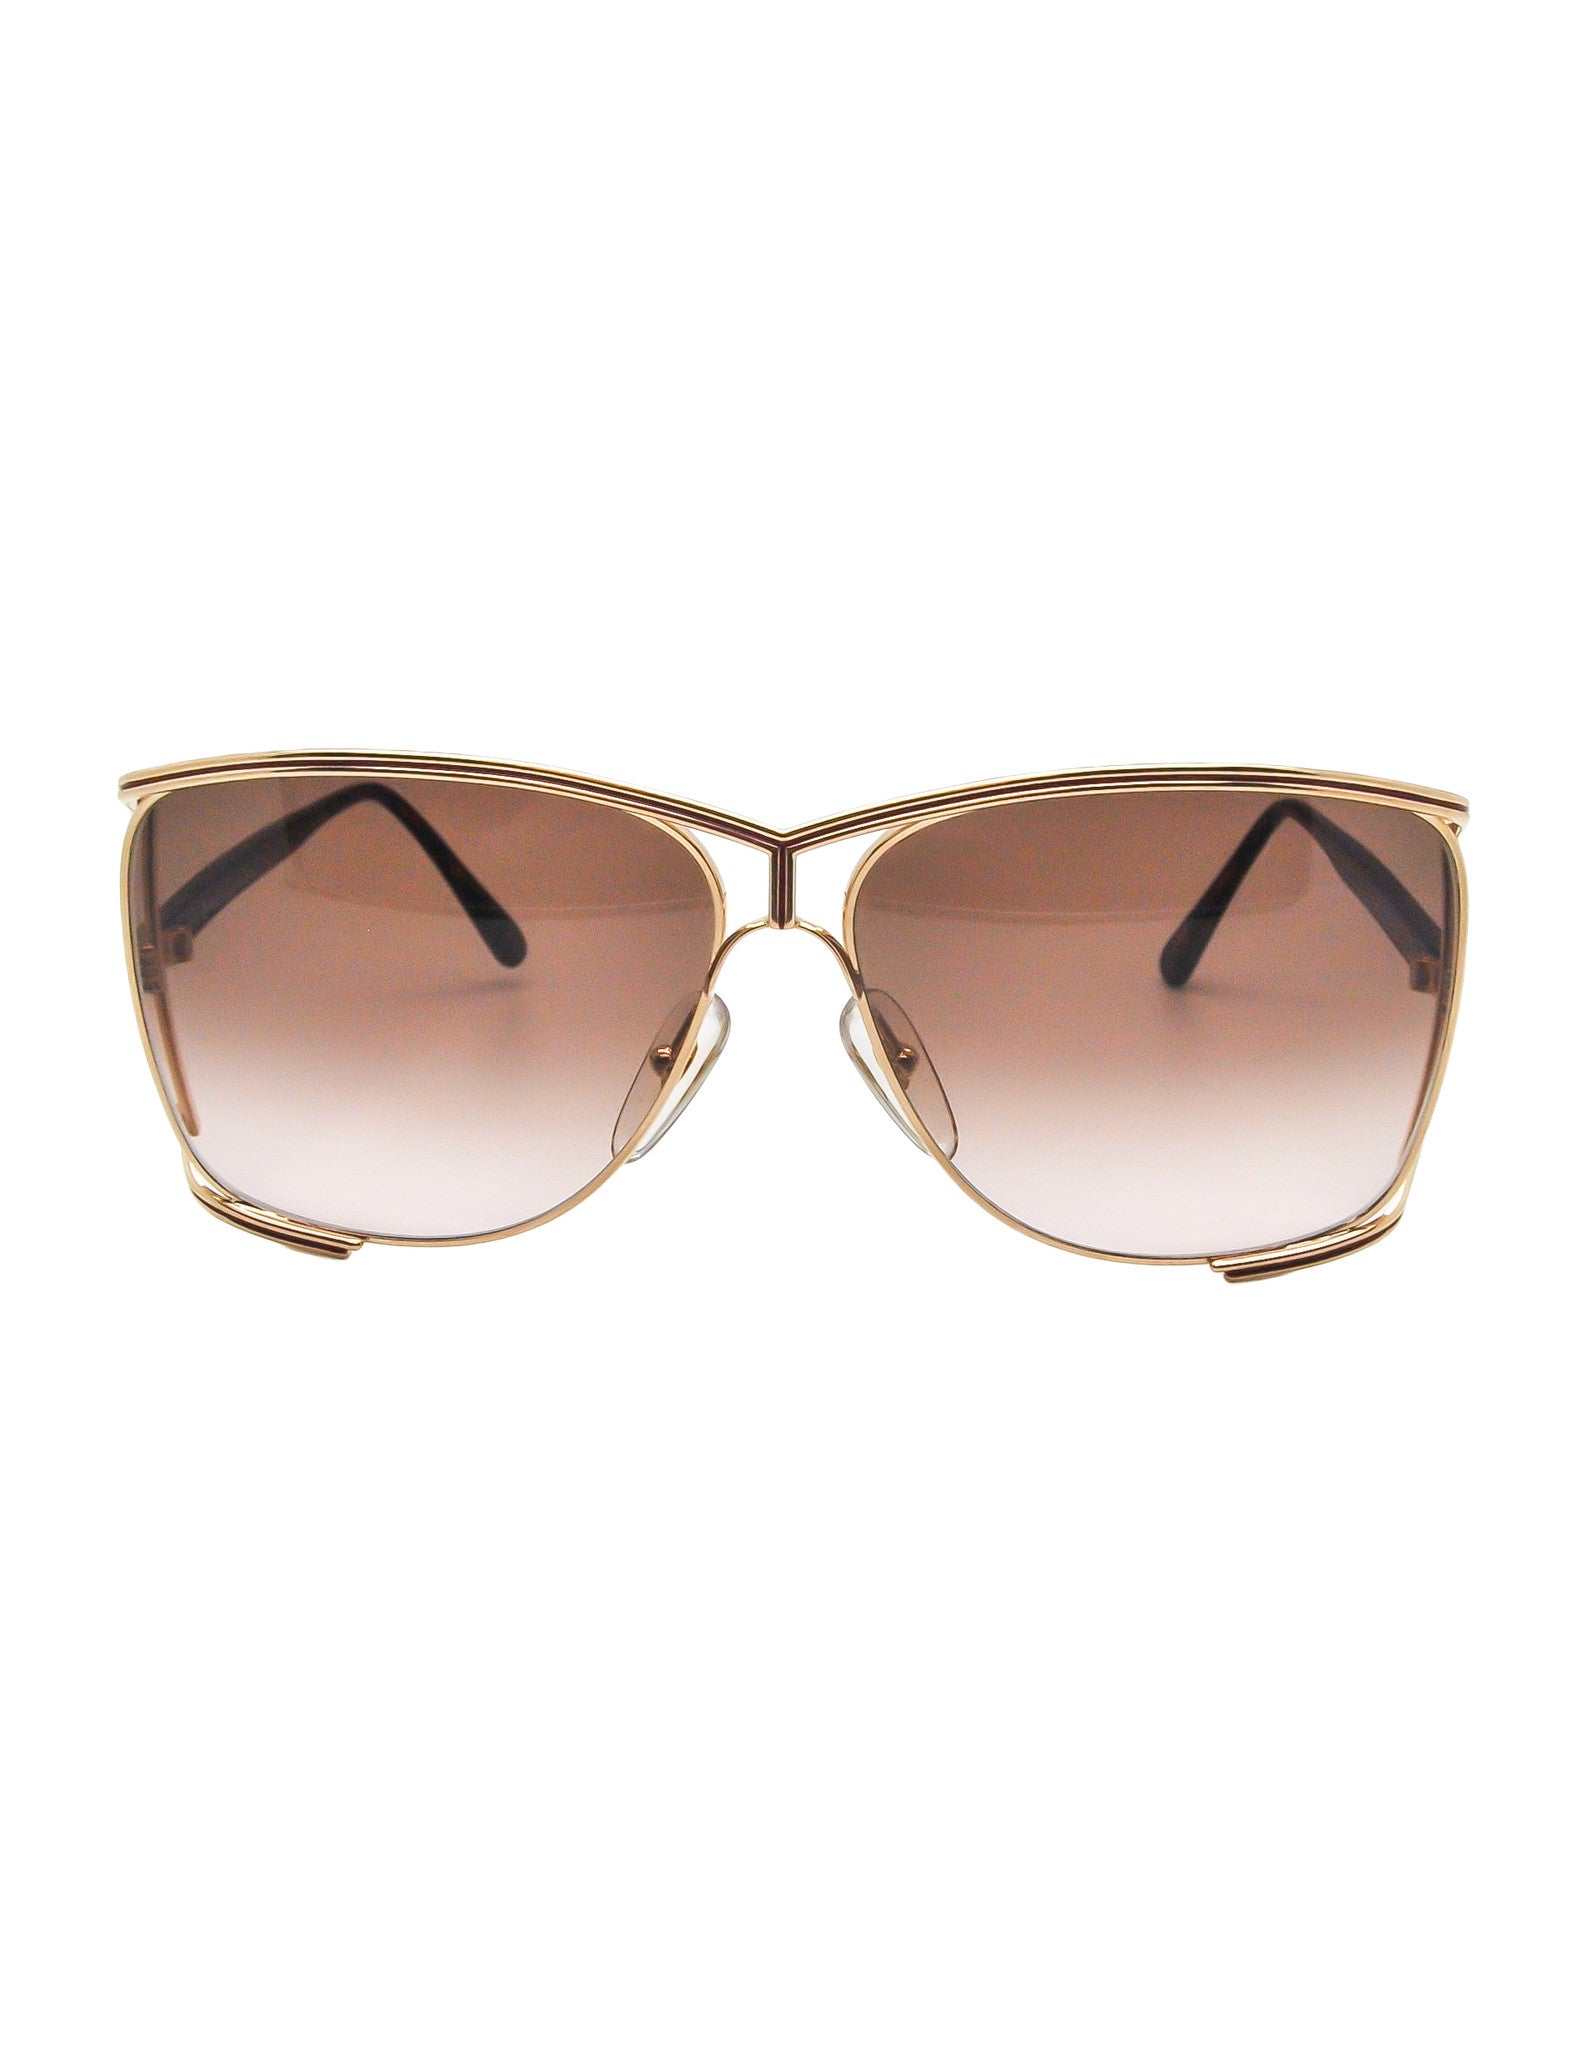 Christian Dior Vintage Gold Tortoise Sunglasses 2688 - Amarcord Vintage Fashion
 - 1